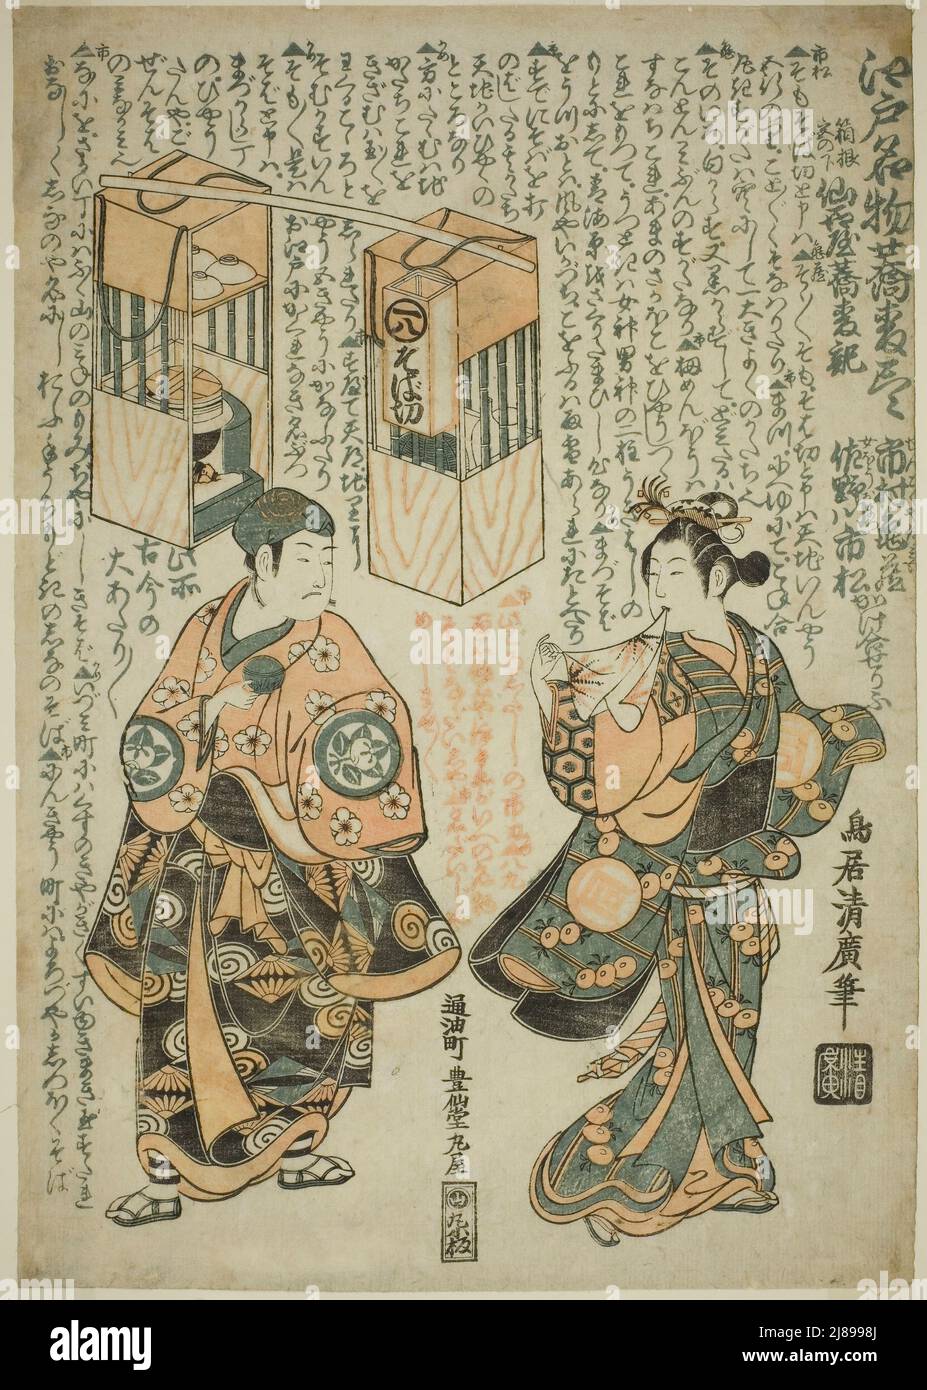 The Actors Ichimura Kamezo I as Sengokuya Ihei and Sanogawa Ichimatsu I as his wife Omatsu in the play &quot;Kashiwa ga Toge Kichirei no Sumo,&quot; performed at Ichimura Theater in the eleventh month, 1755, 1755. Stock Photo